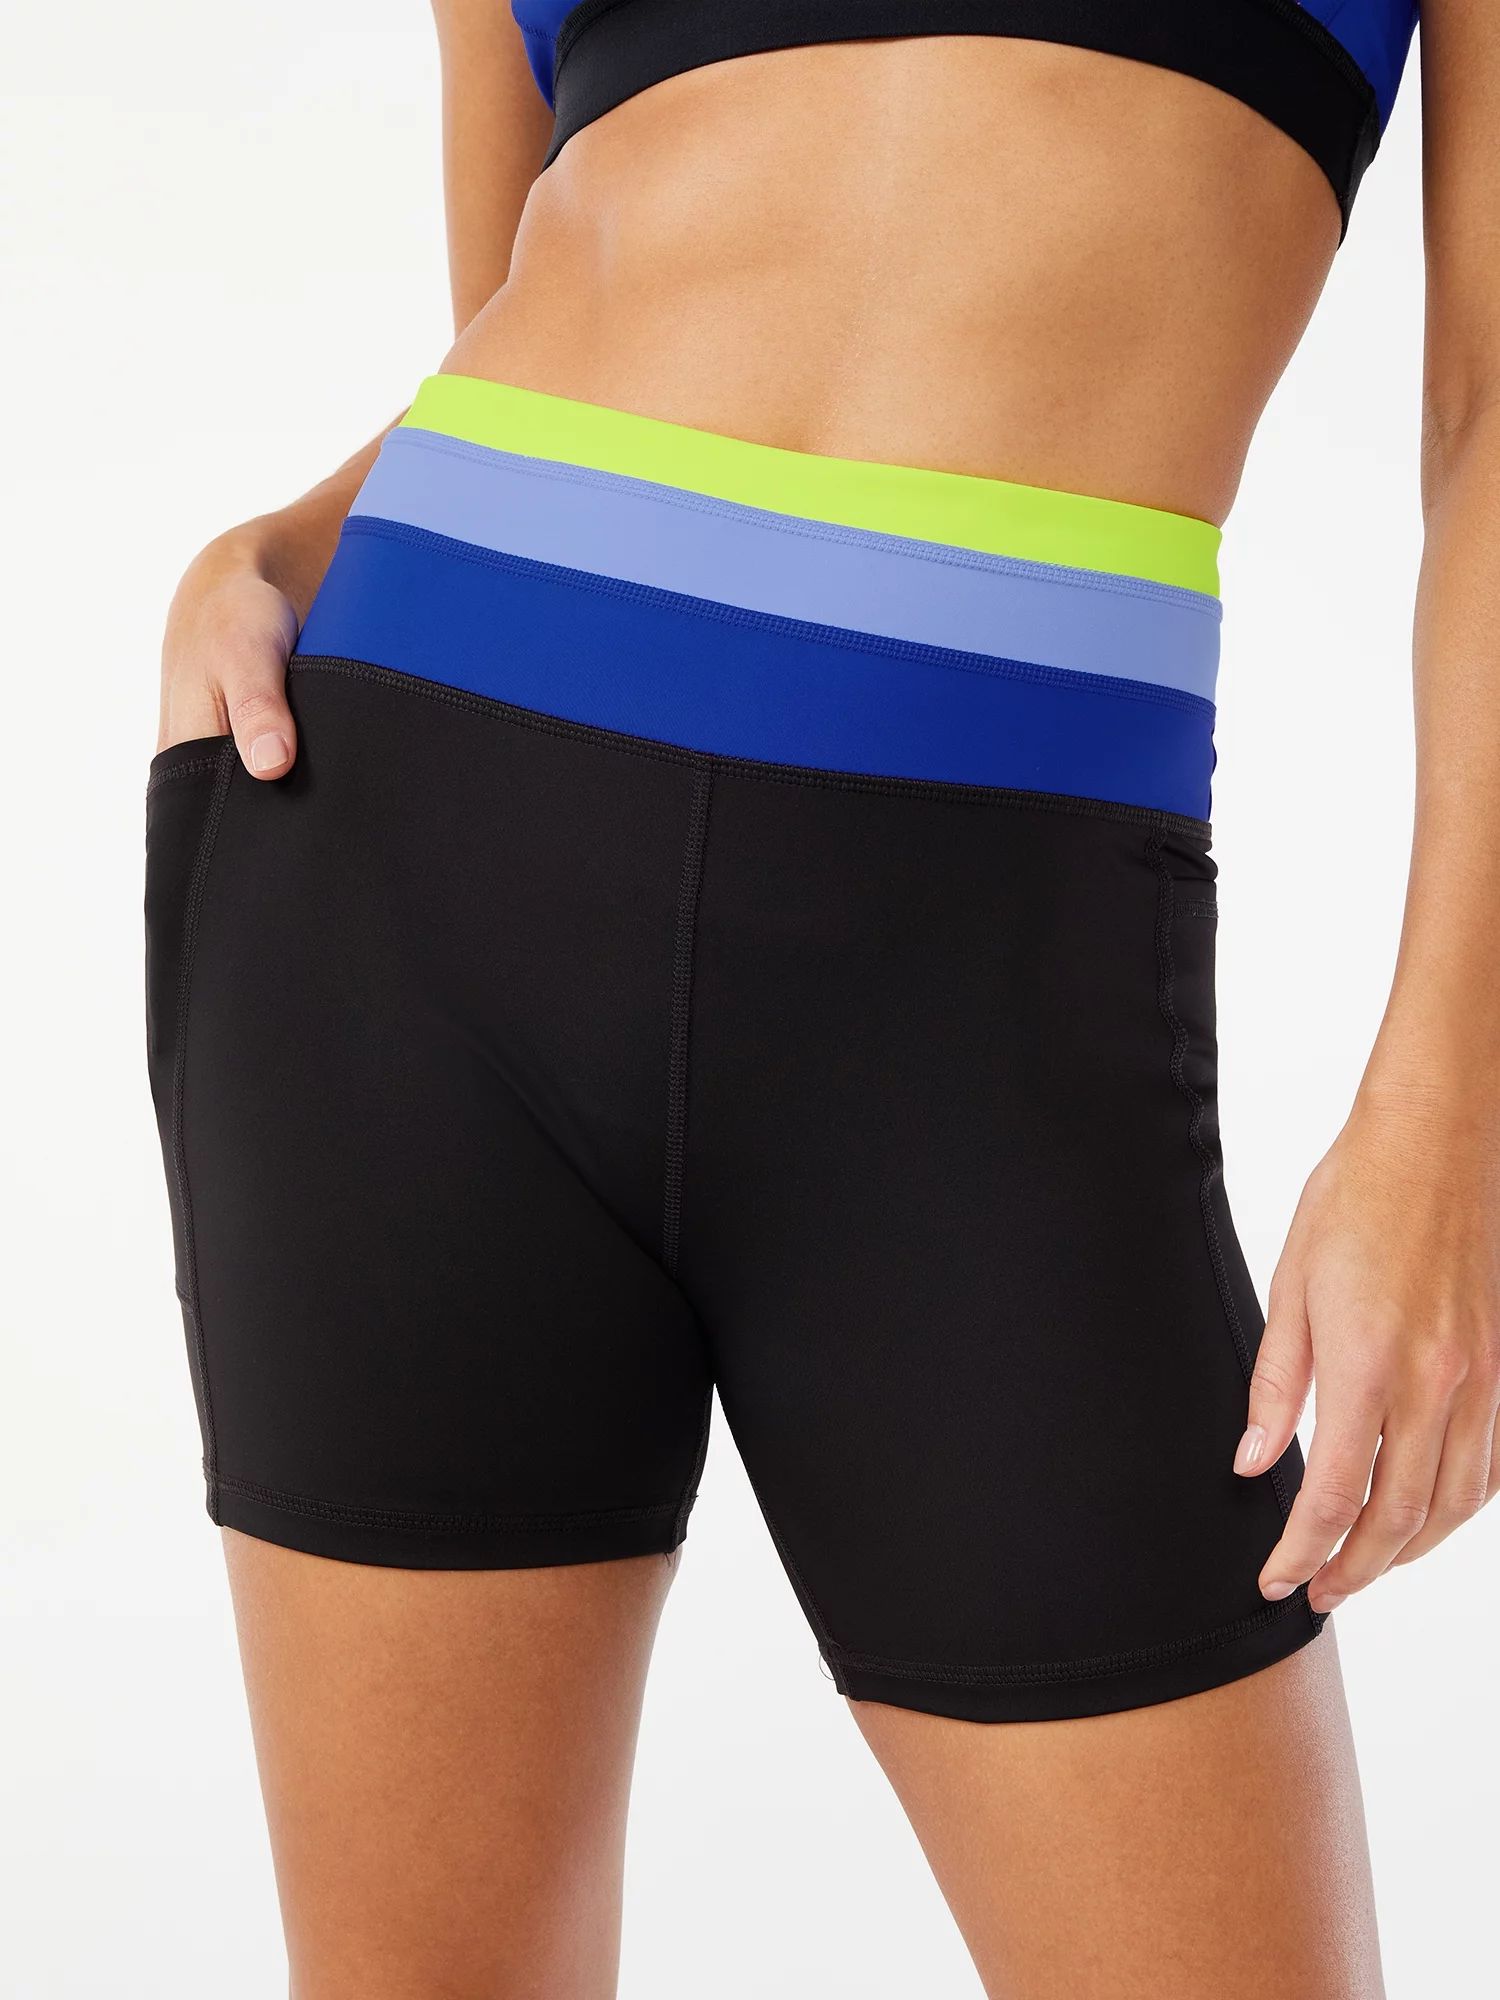 Love & Sports Women's Color Band Bike Shorts, 5” inseam - Walmart.com | Walmart (US)